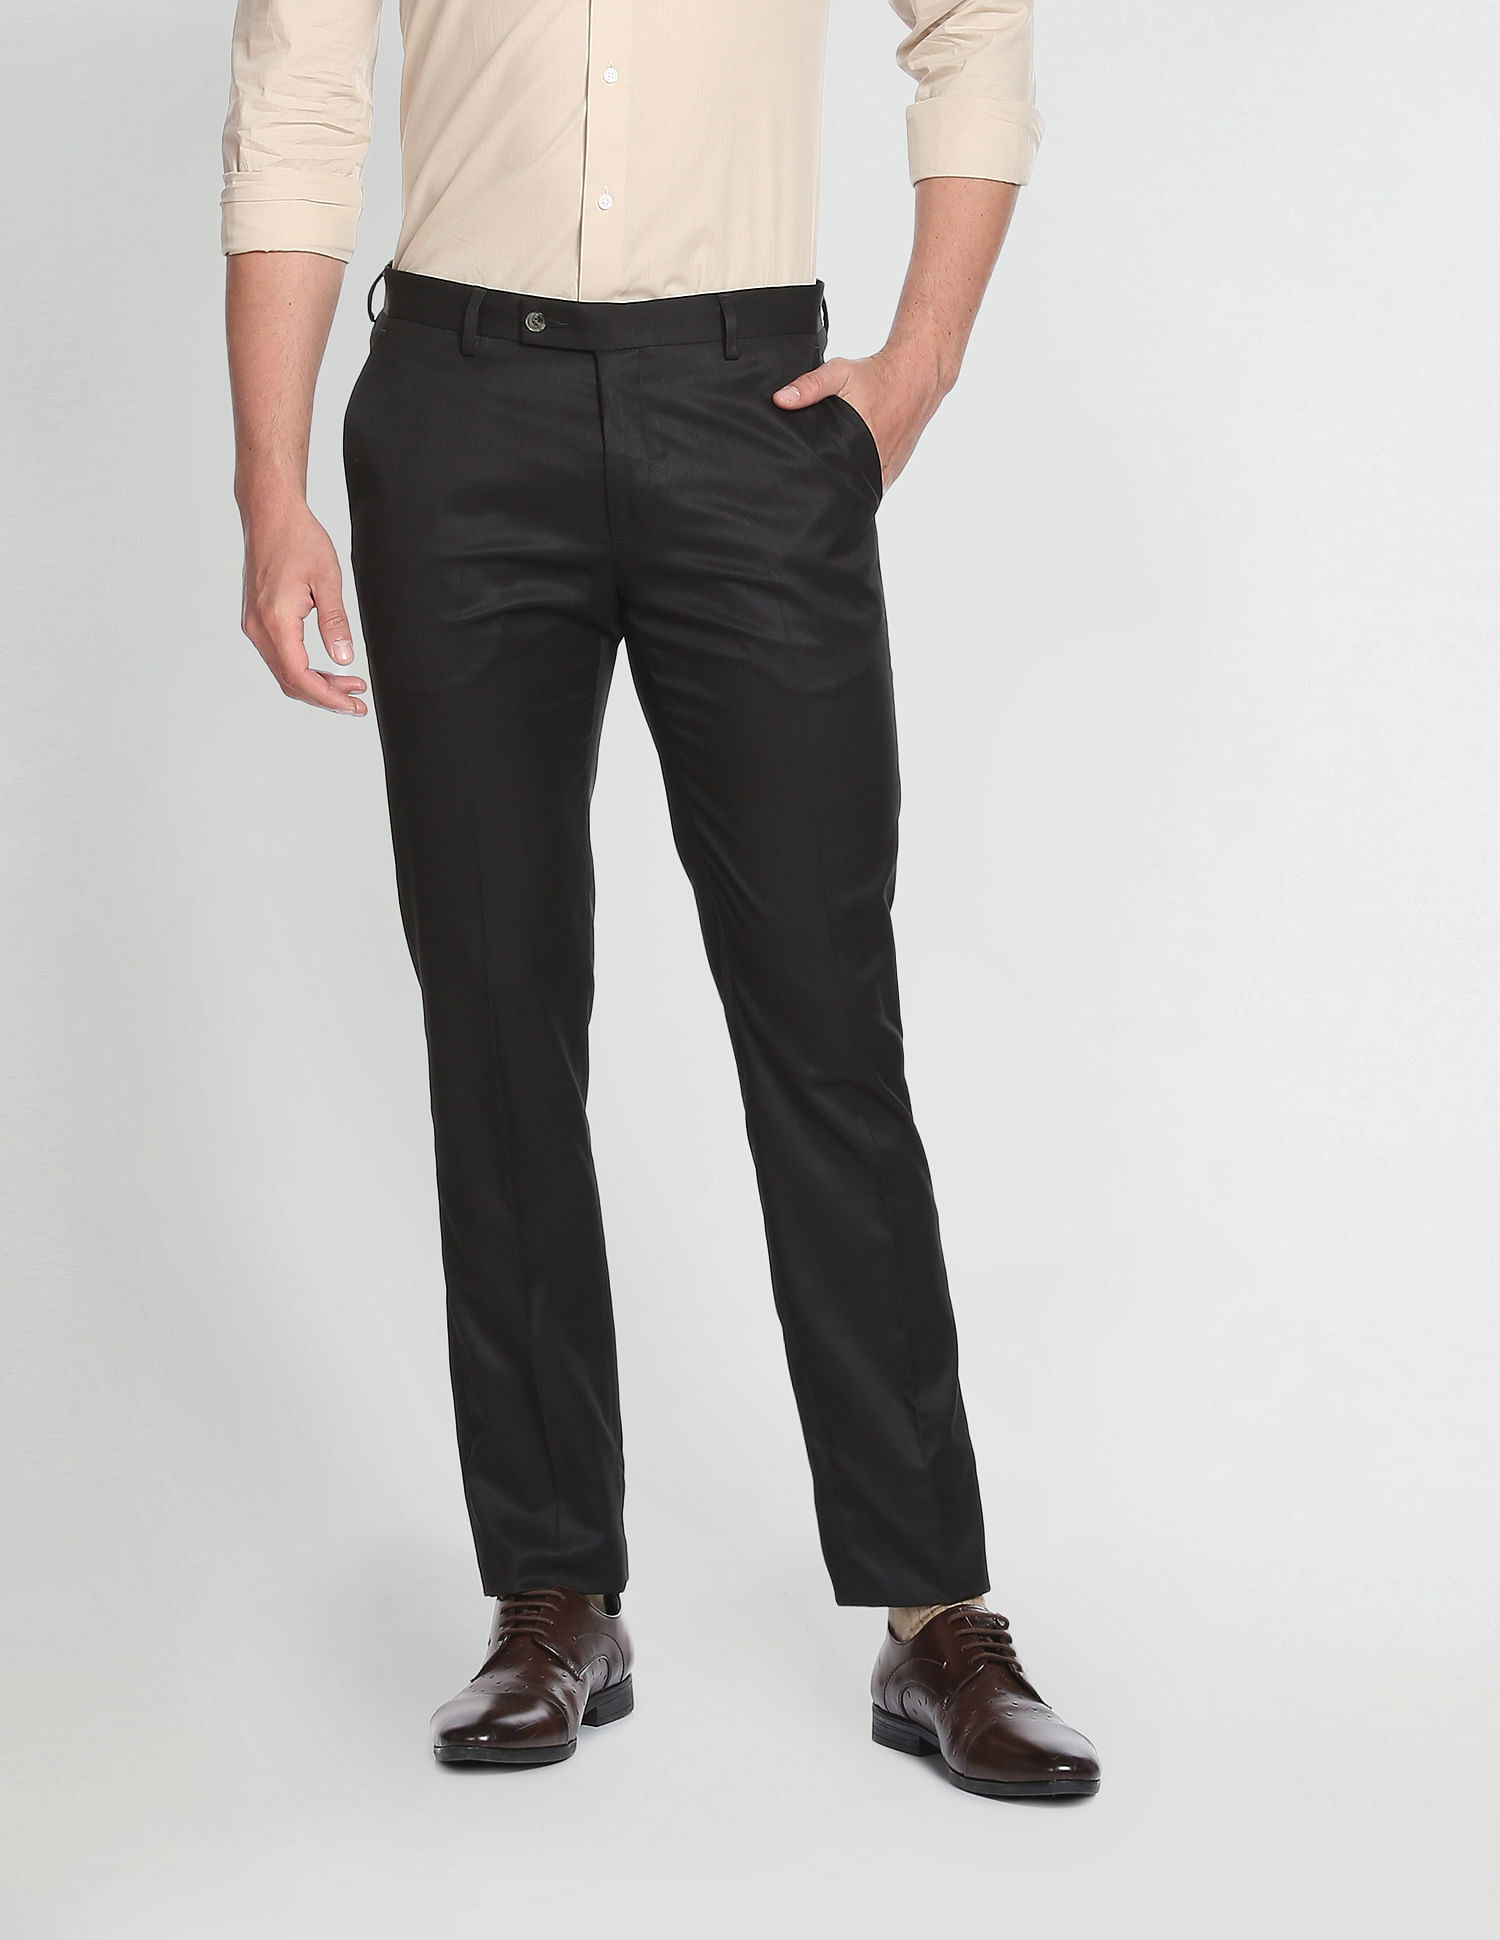 Buy online Slim Fit Black Formal Trousers from Bottom Wear for Men by Bukkl  for 699 at 30 off  2023 Limeroadcom